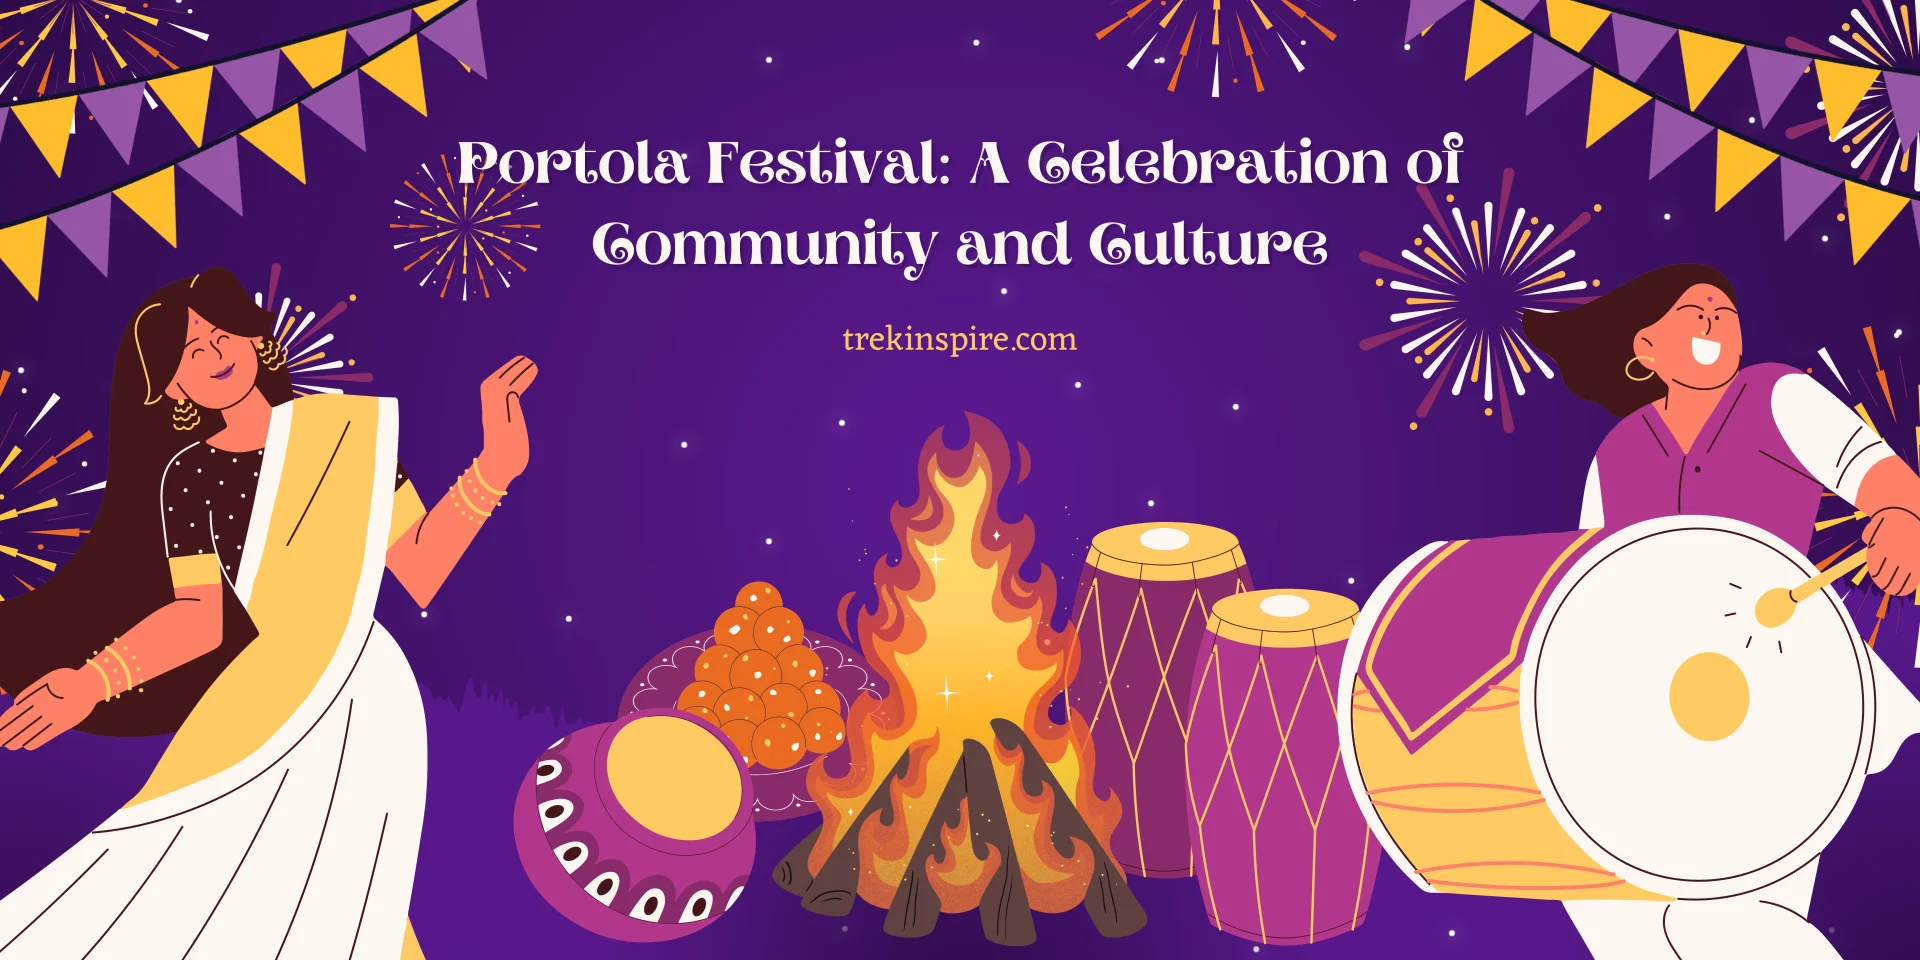 Portola Festival A Celebration of Community and Culture